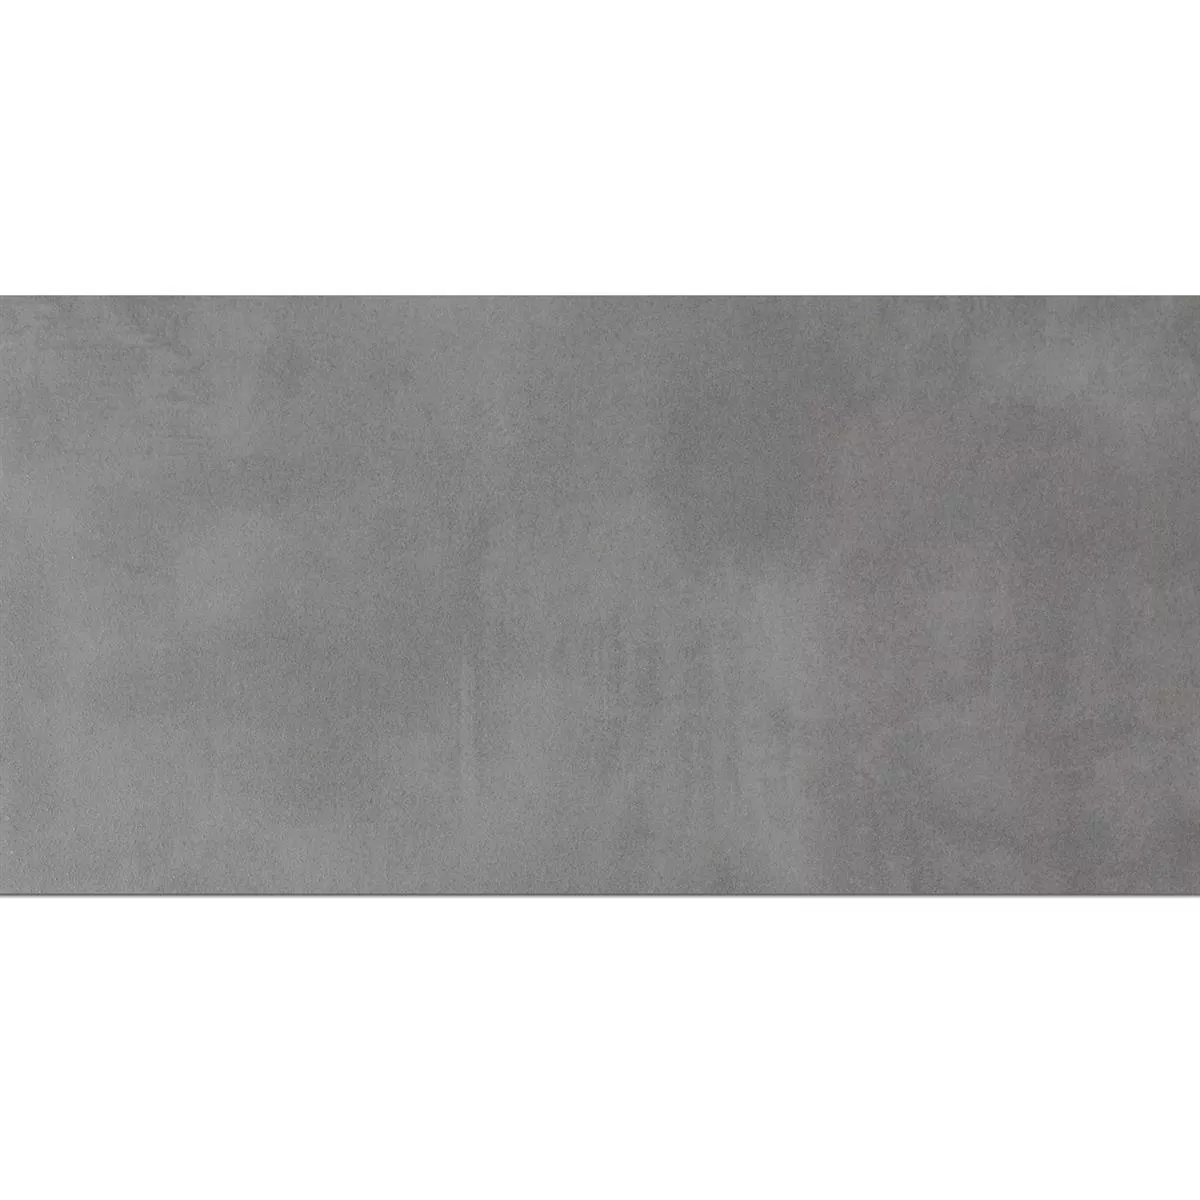 Sample Terrastegels Zeus Beton Optic Grey 30x60cm